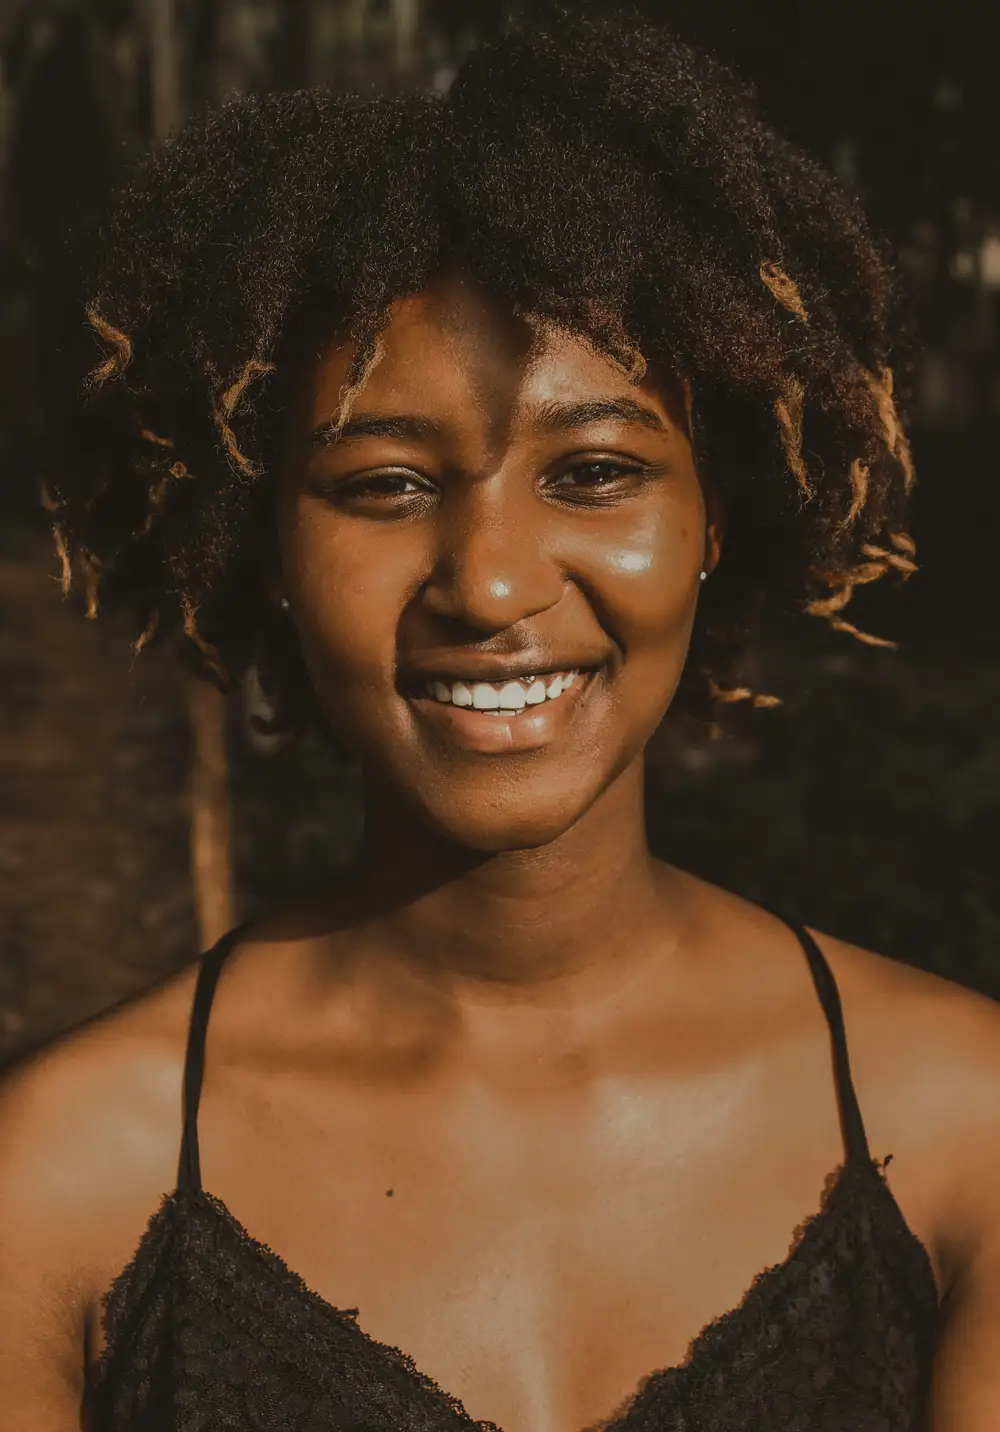 Beautiful African girl smiling